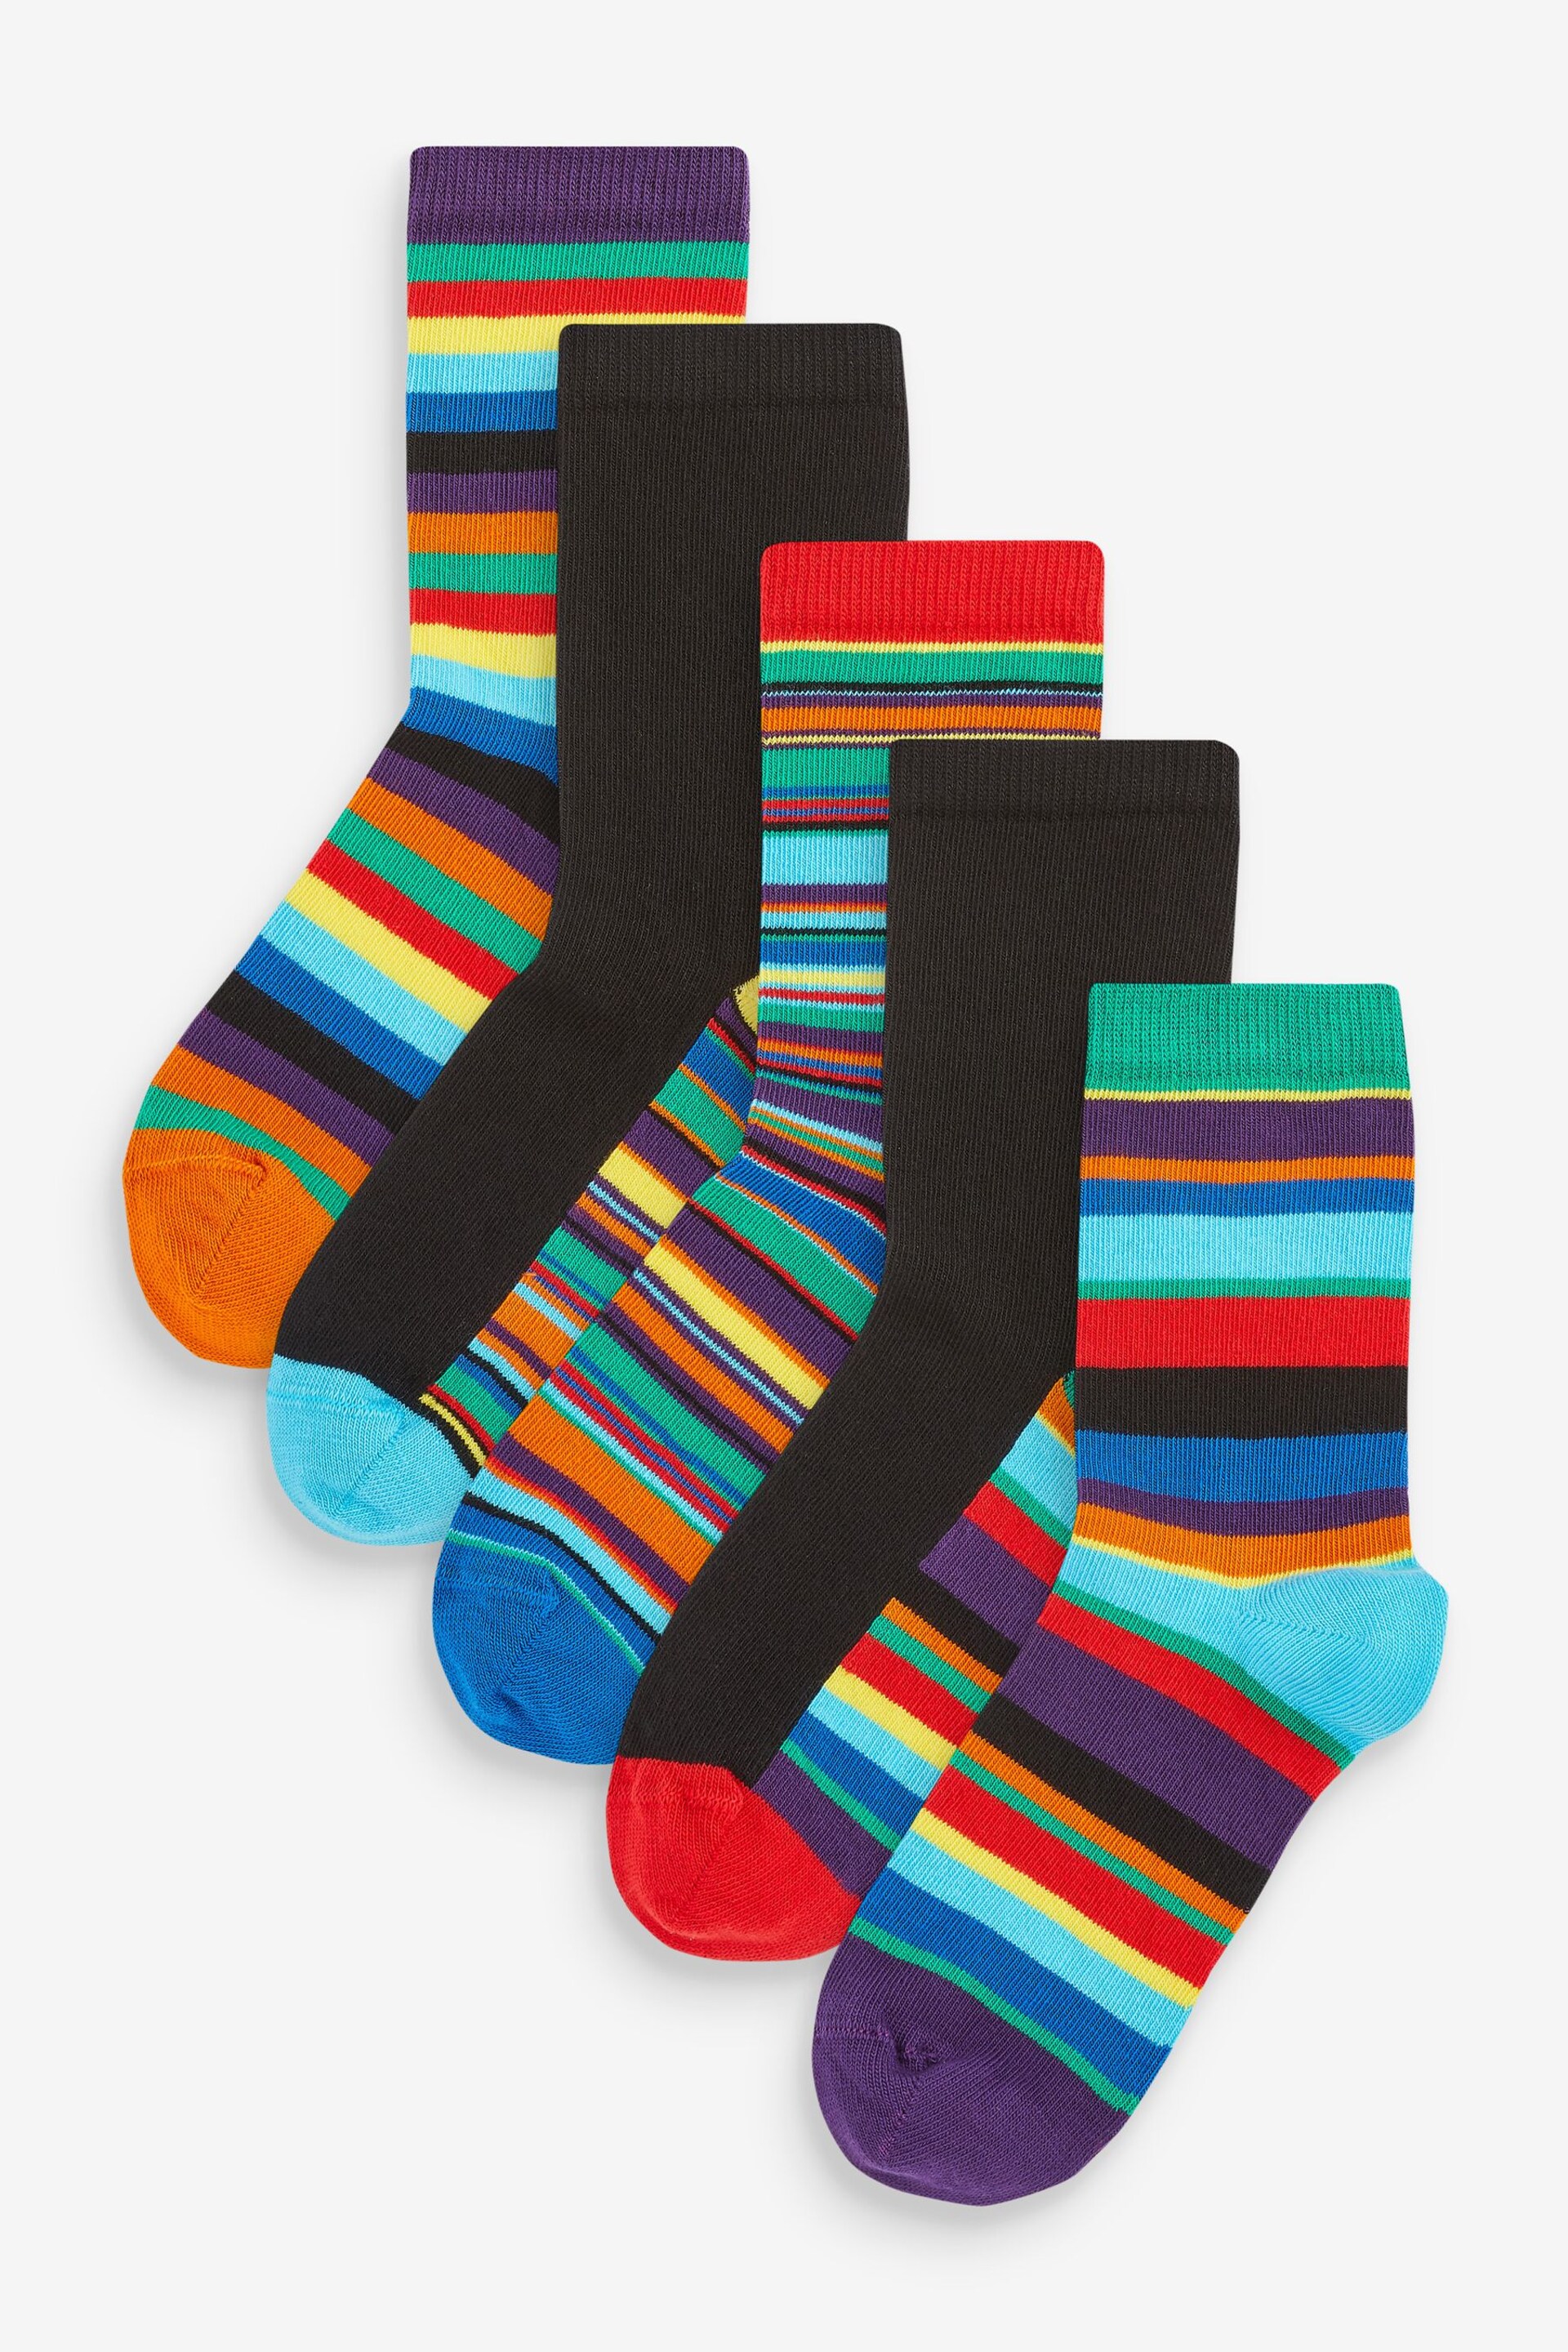 Monochrome Cotton Rich Socks 5 Pack - Image 1 of 1